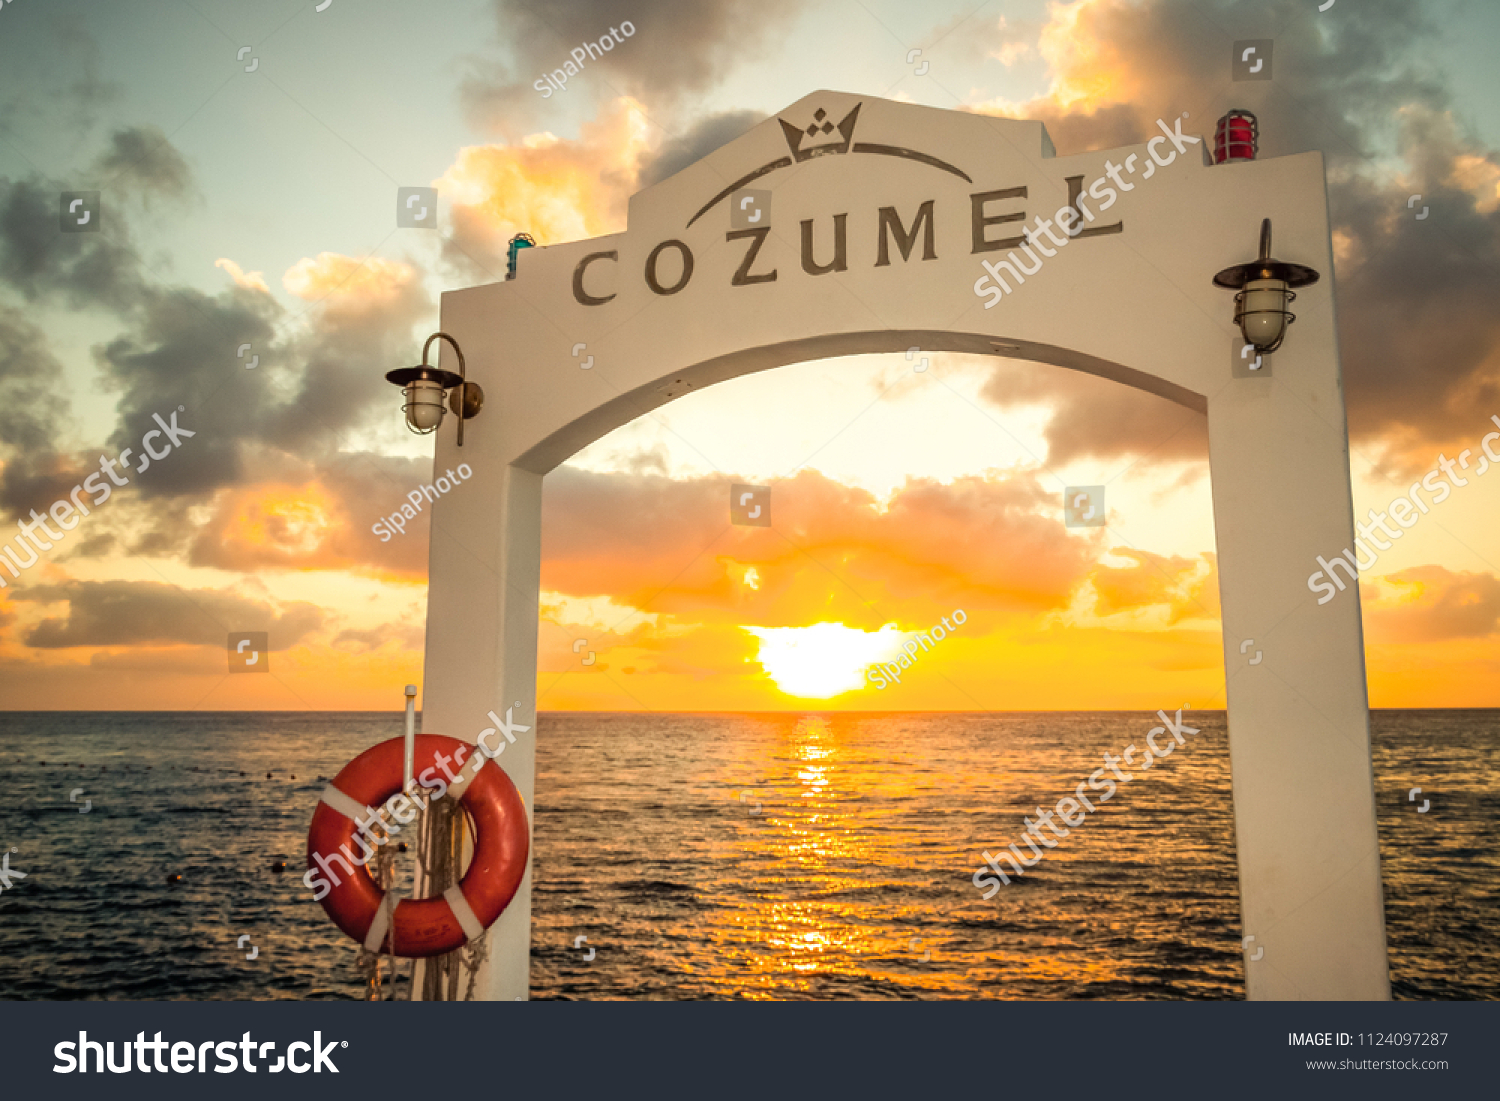 Pier On Cozumel Crusise Ship Background Stock Photo Edit Now